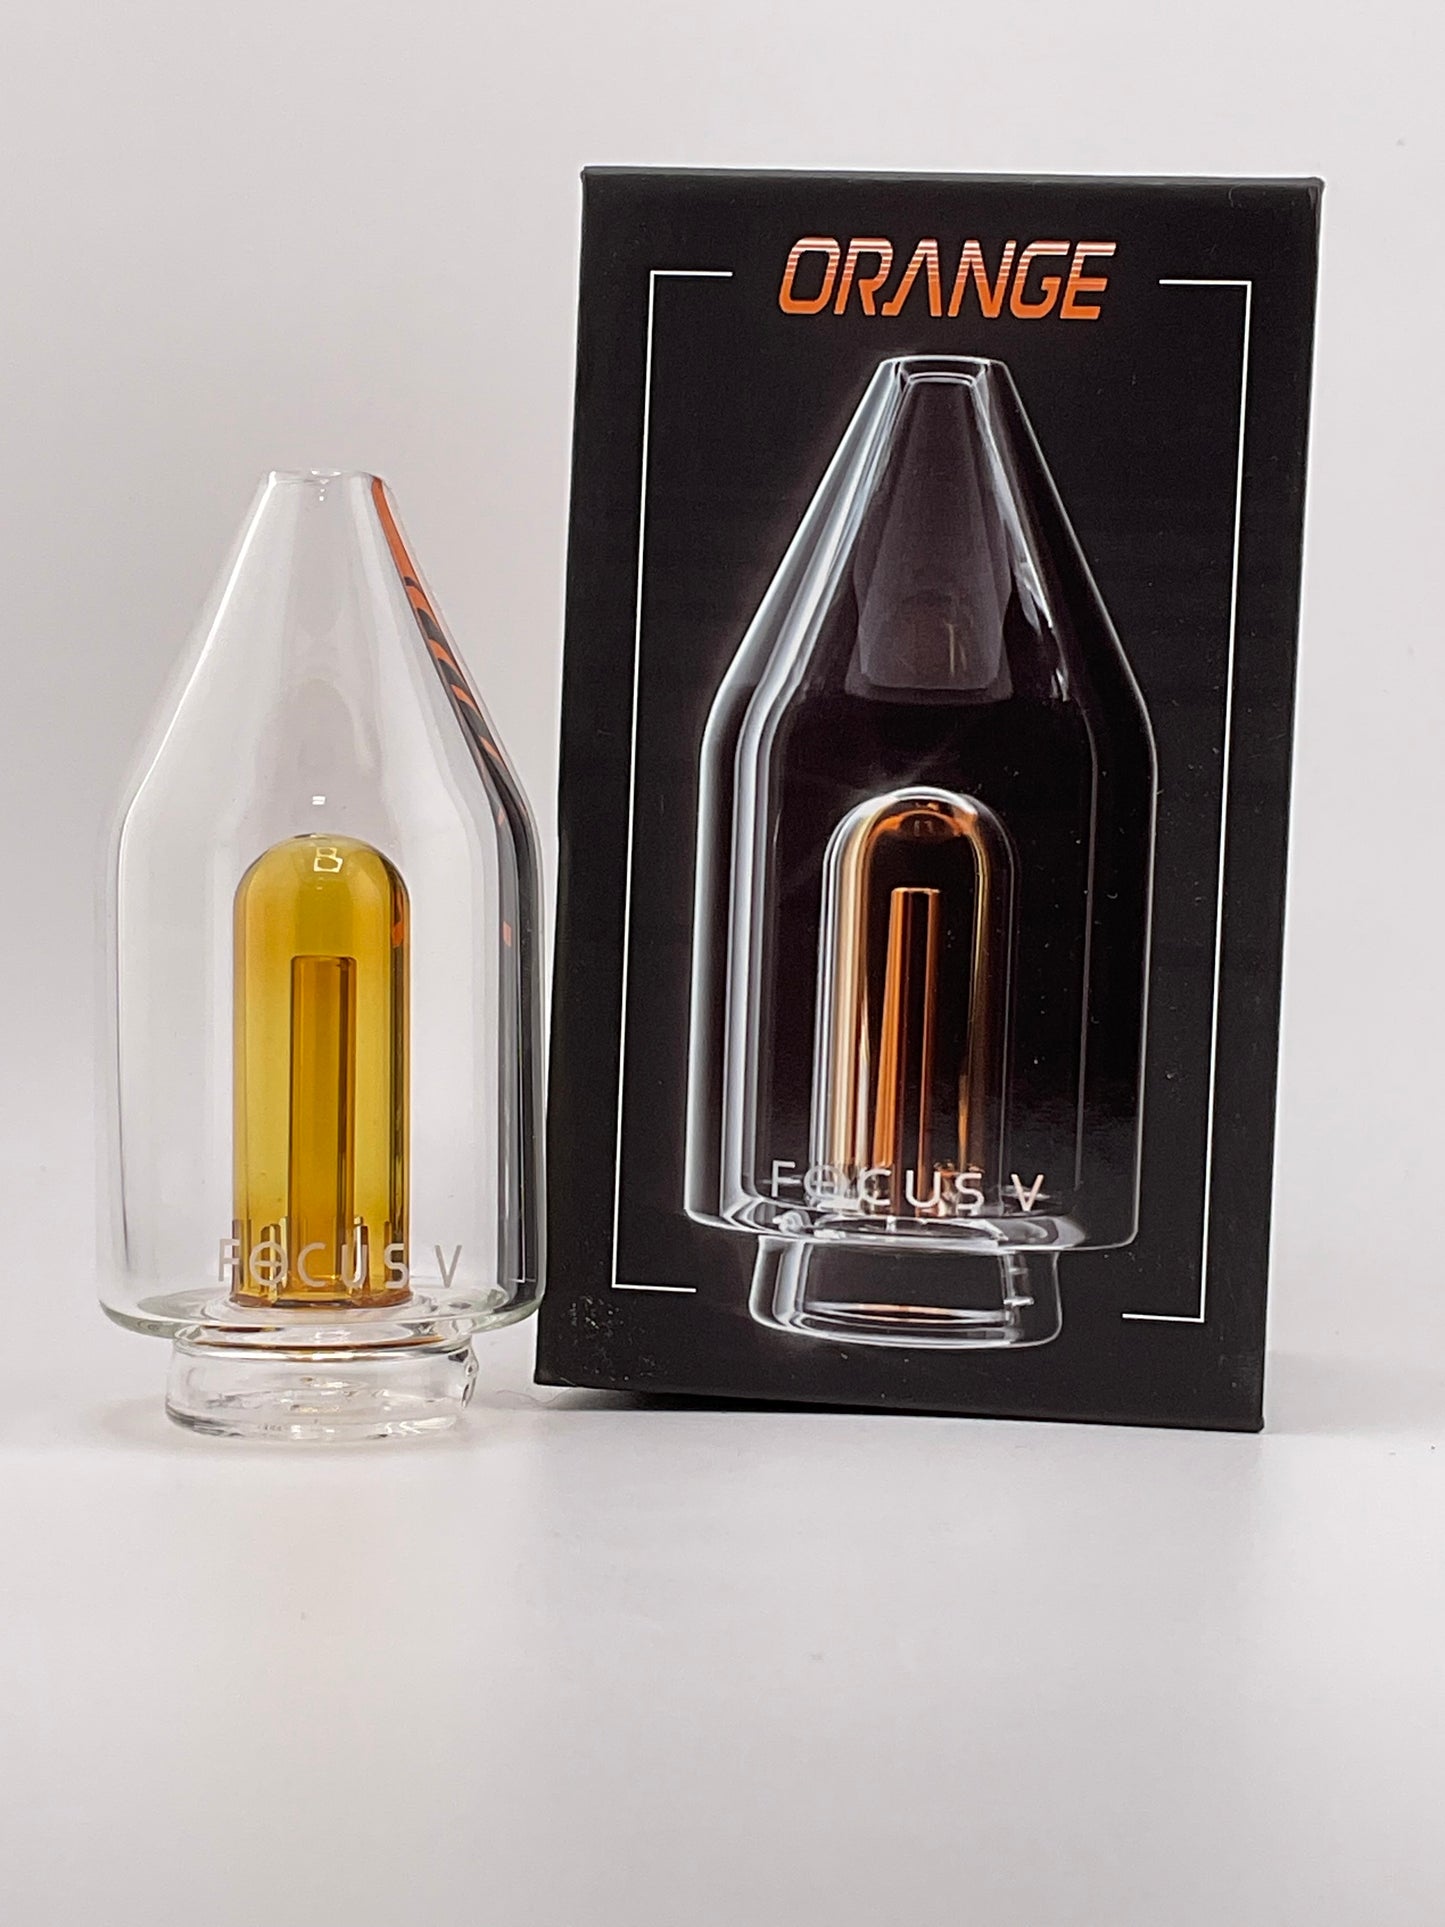 Focus V Chromatix Glass Top Orange